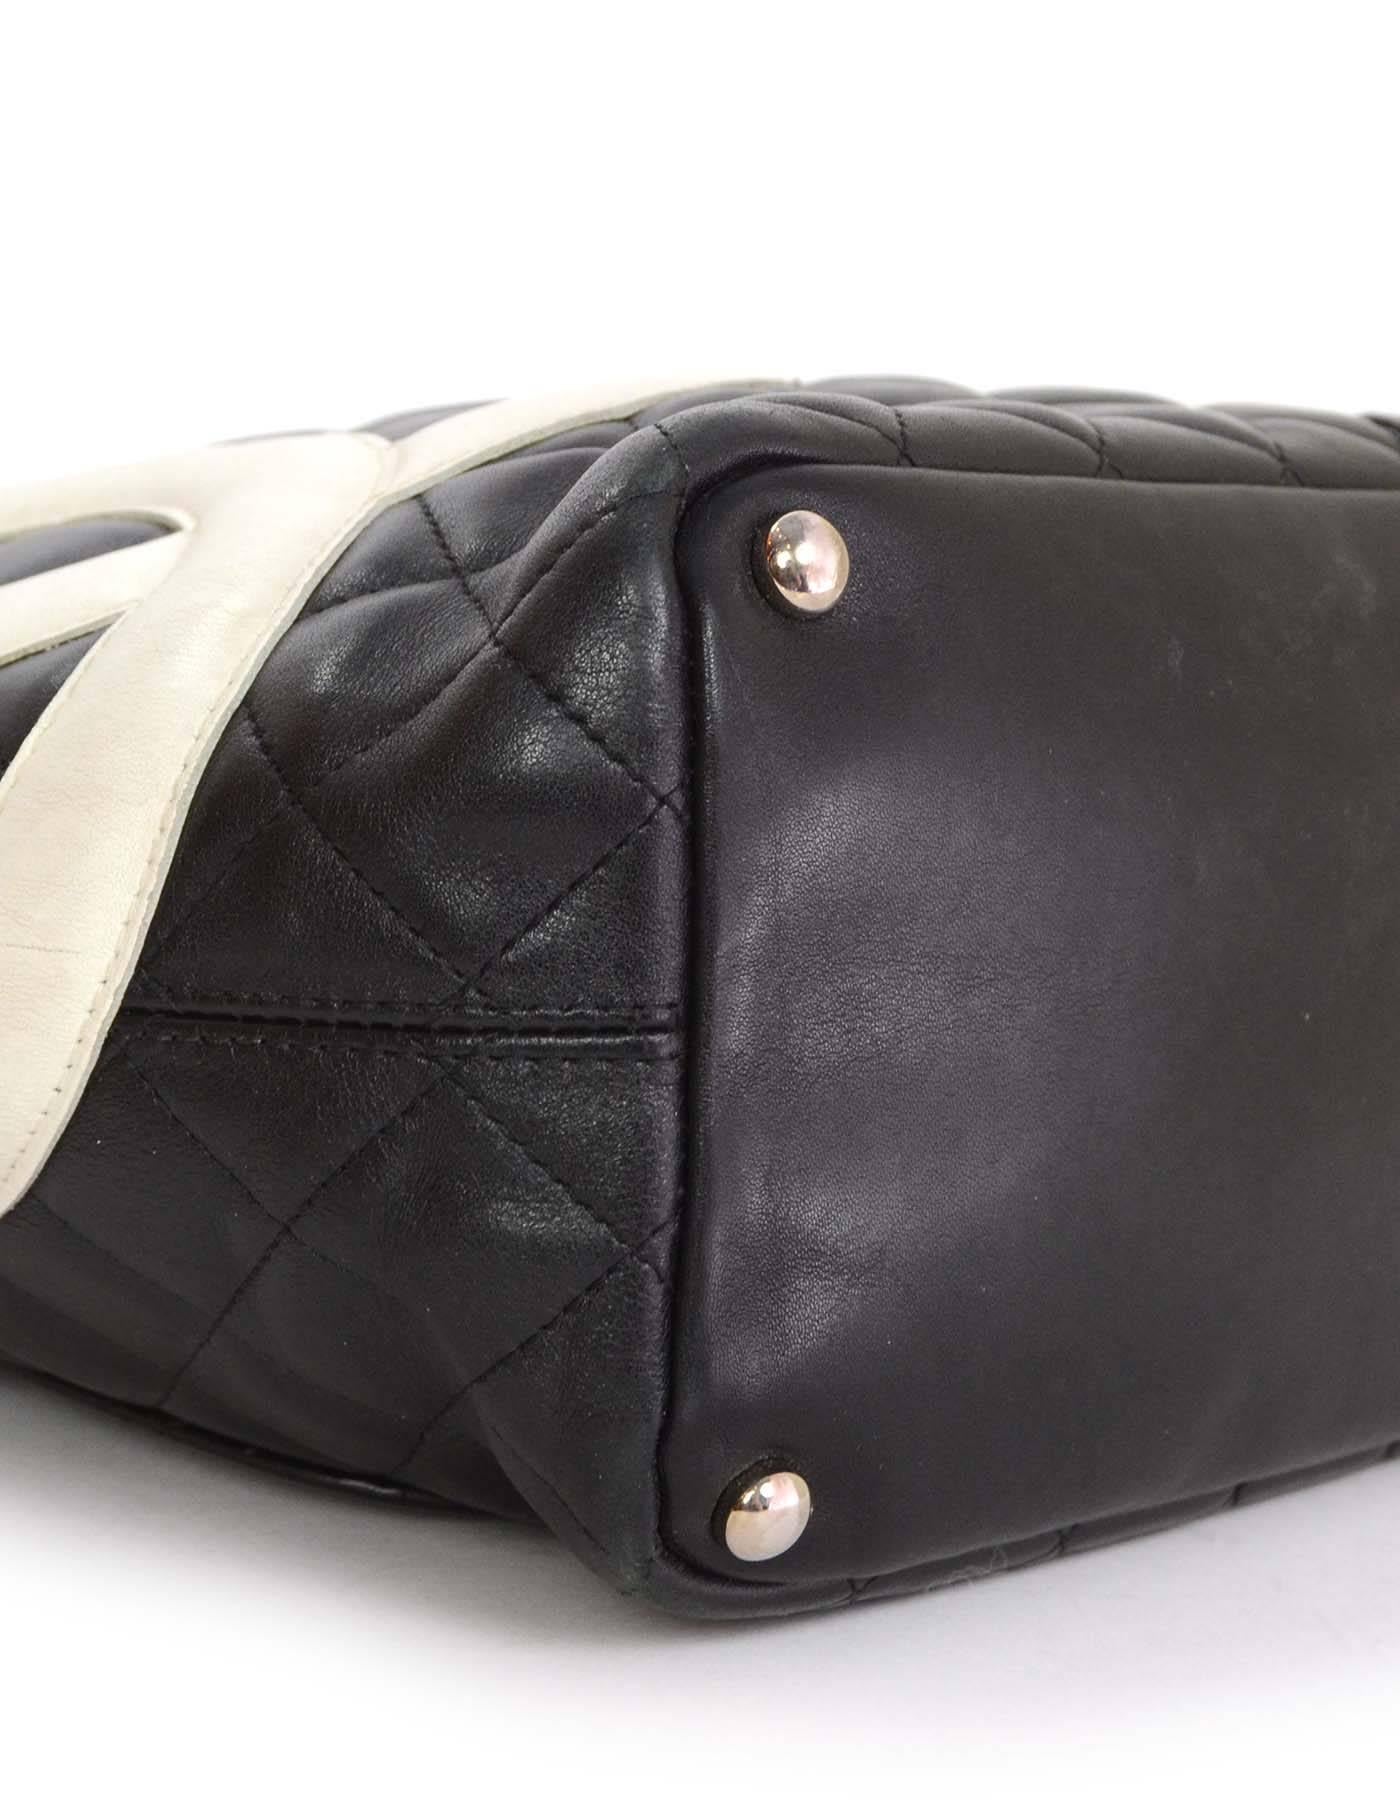 Chanel Black & White Leather Cambon Tote Bag SHW 1